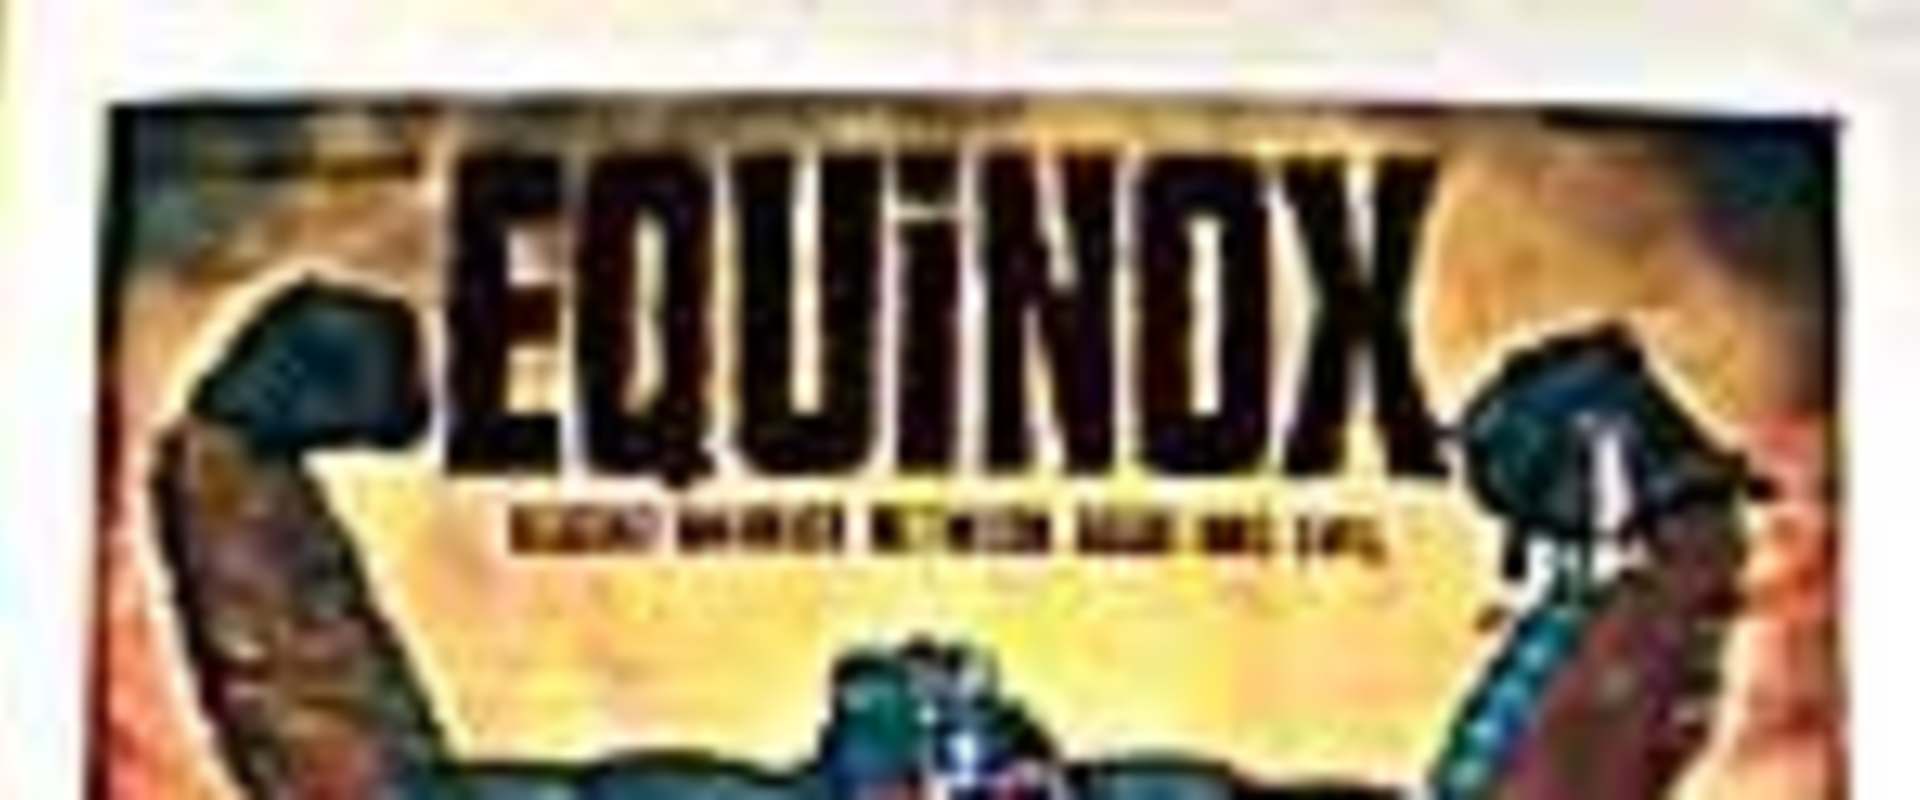 Equinox background 1